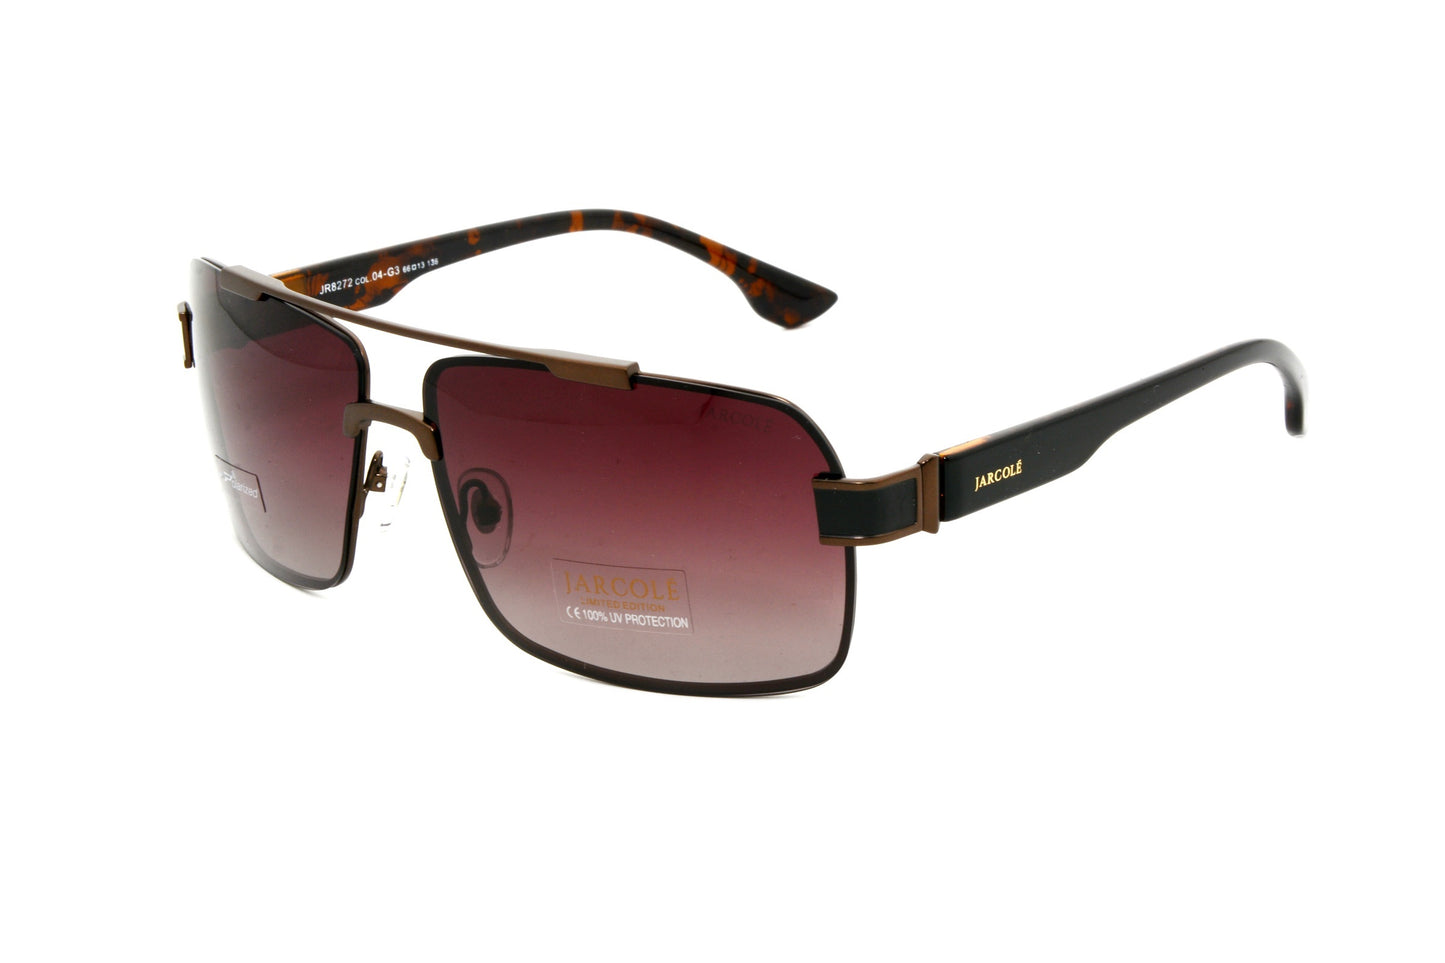 Jarcole sunglasses JR8272 04-G3